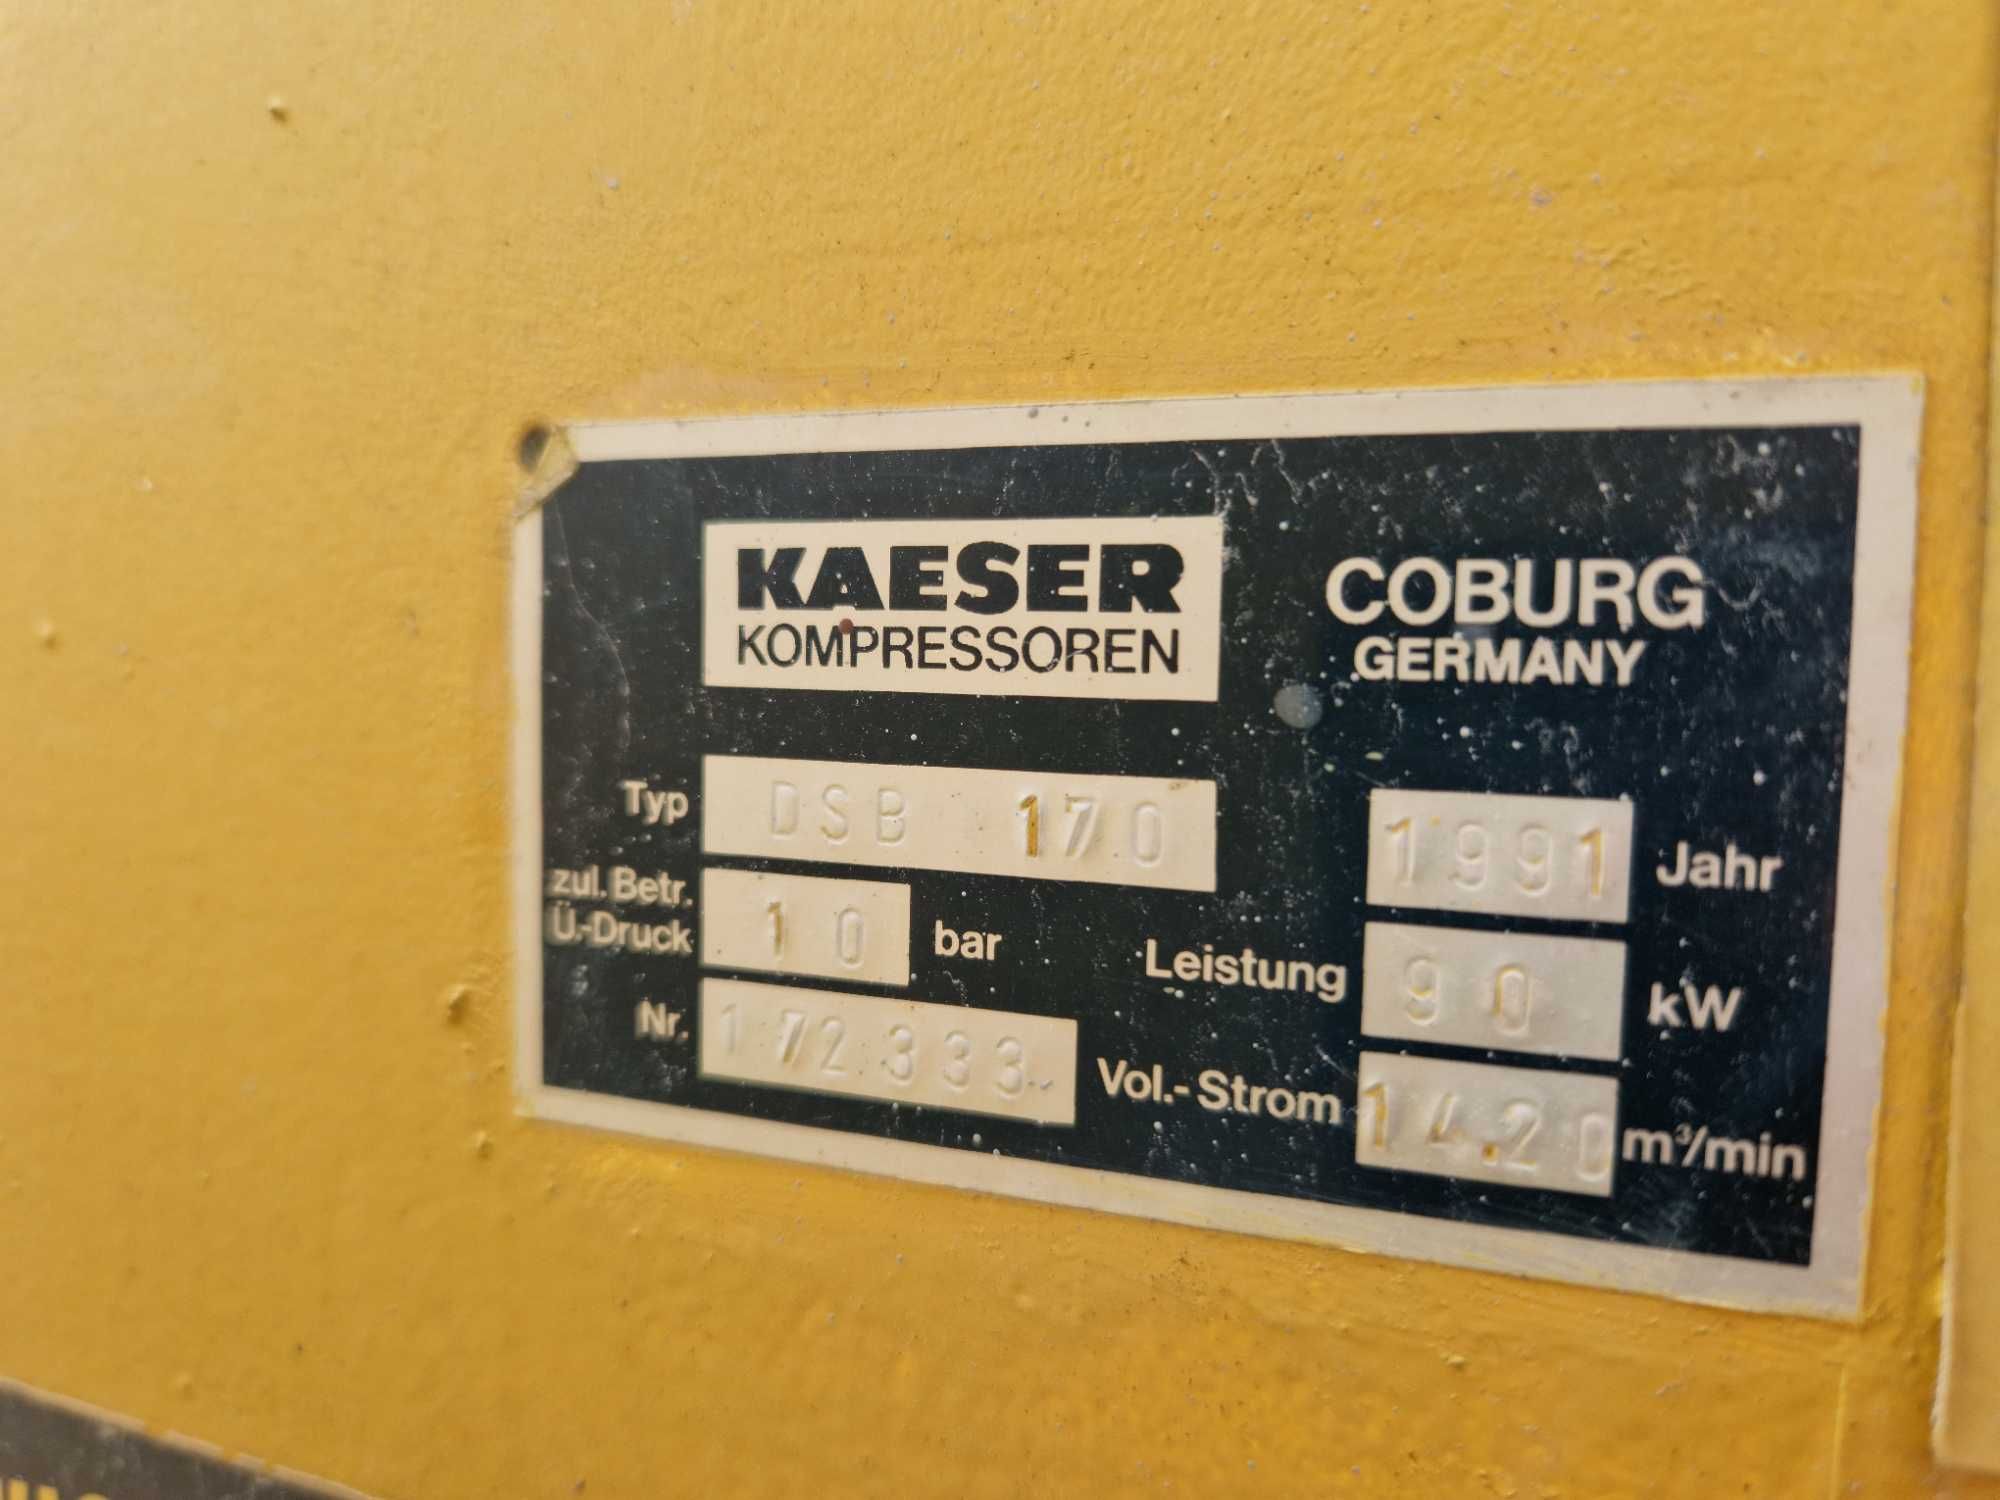 Kompresor śrubowy KAESERDSB 170 90 kW 10 bar